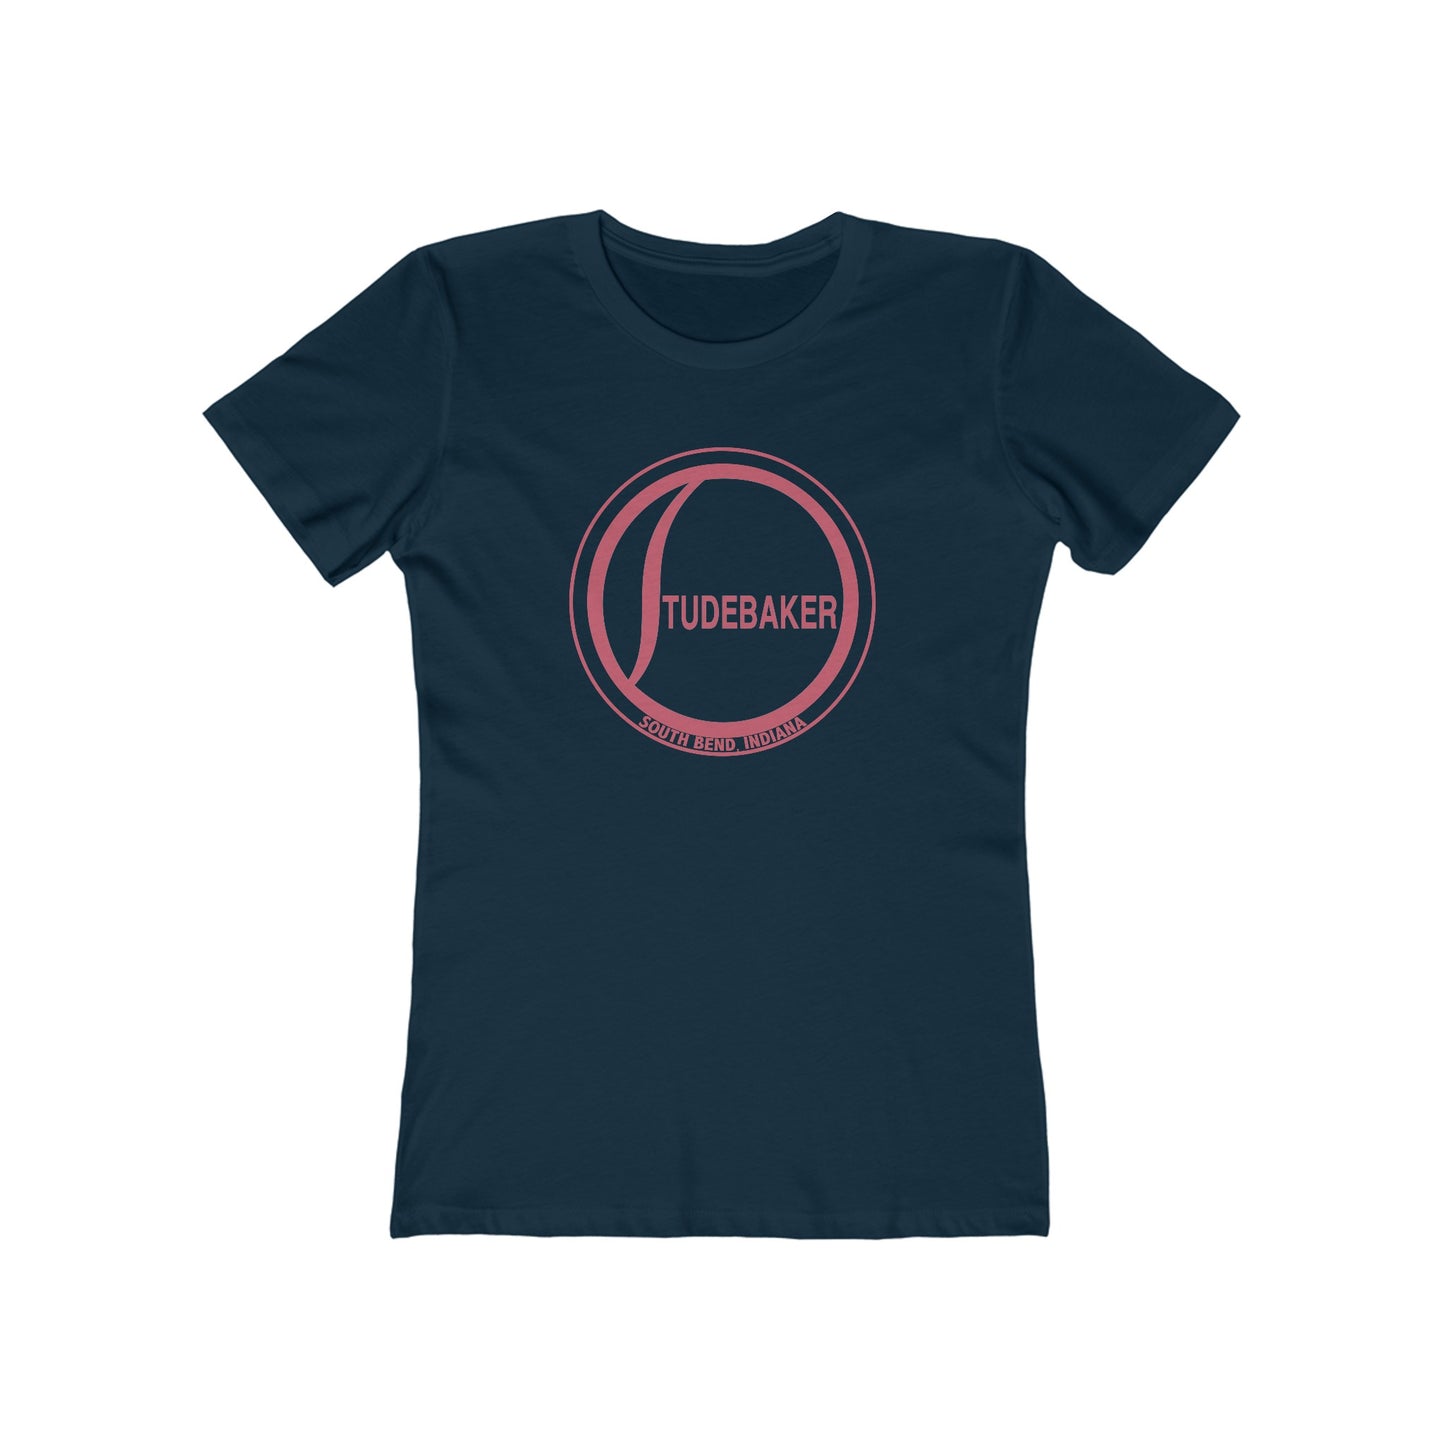 Studebaker - Women's T-shirt